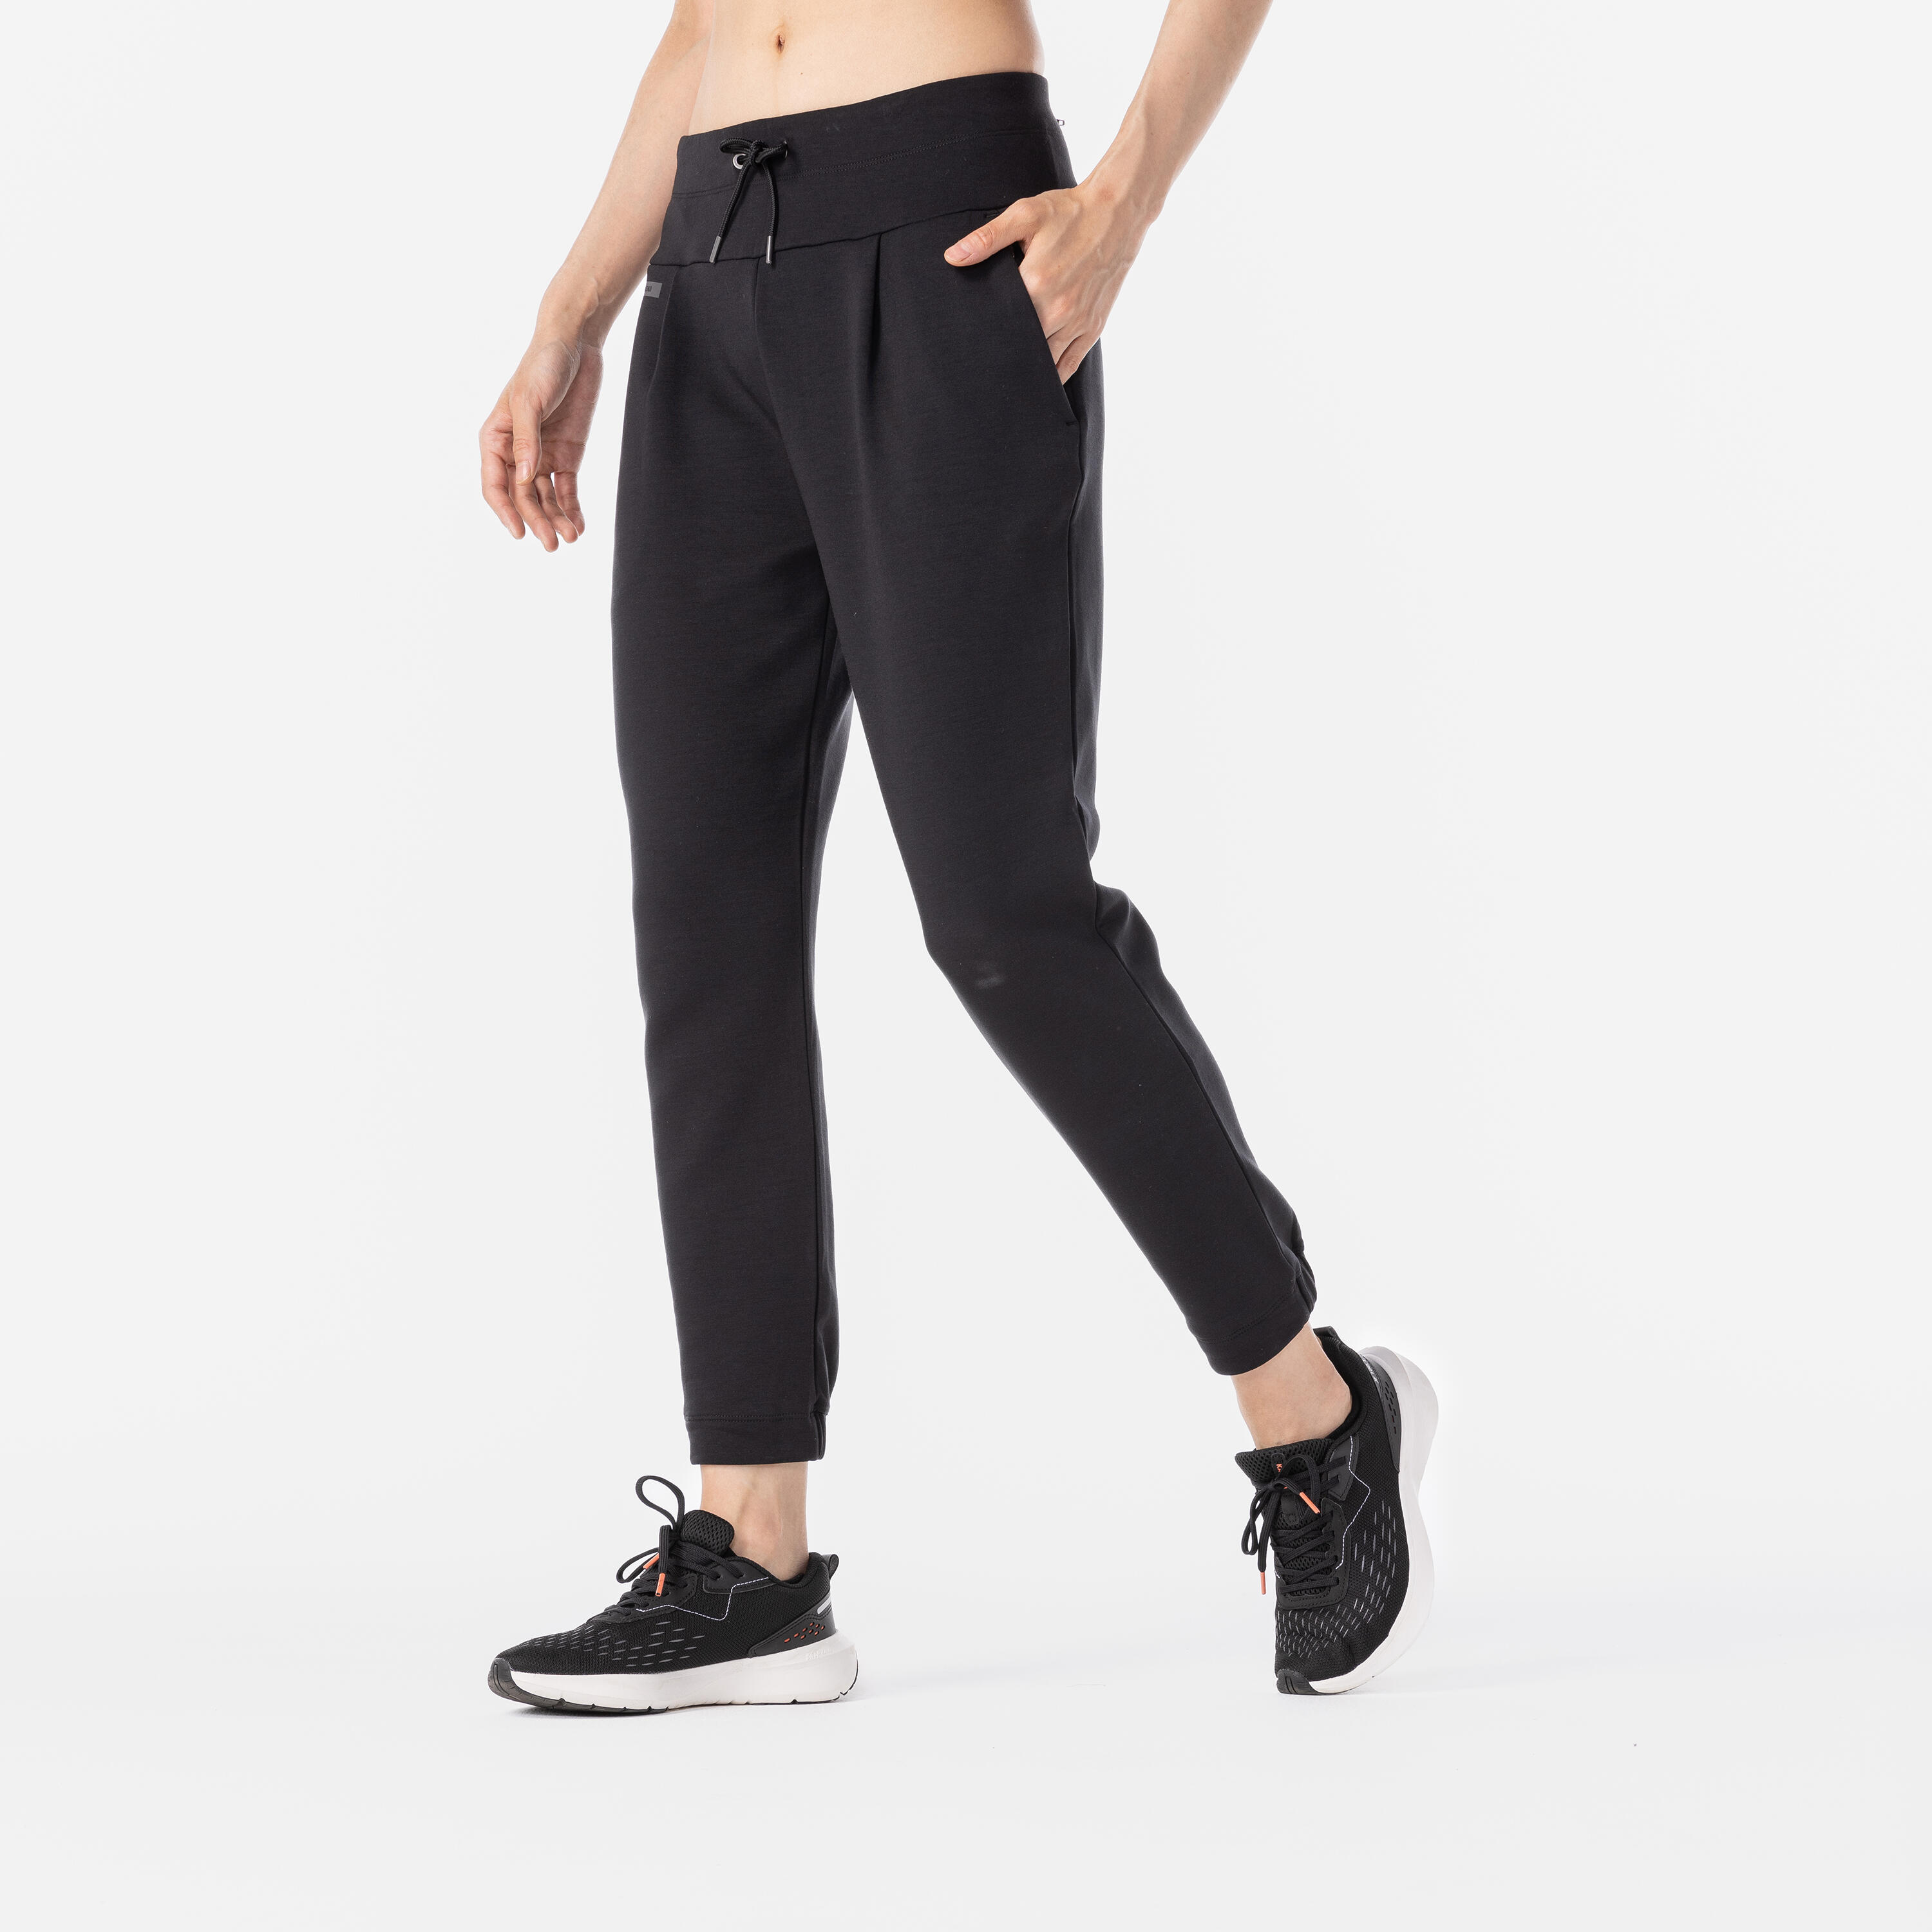 Women's Running/Jogging Pants - Warm 500 Black